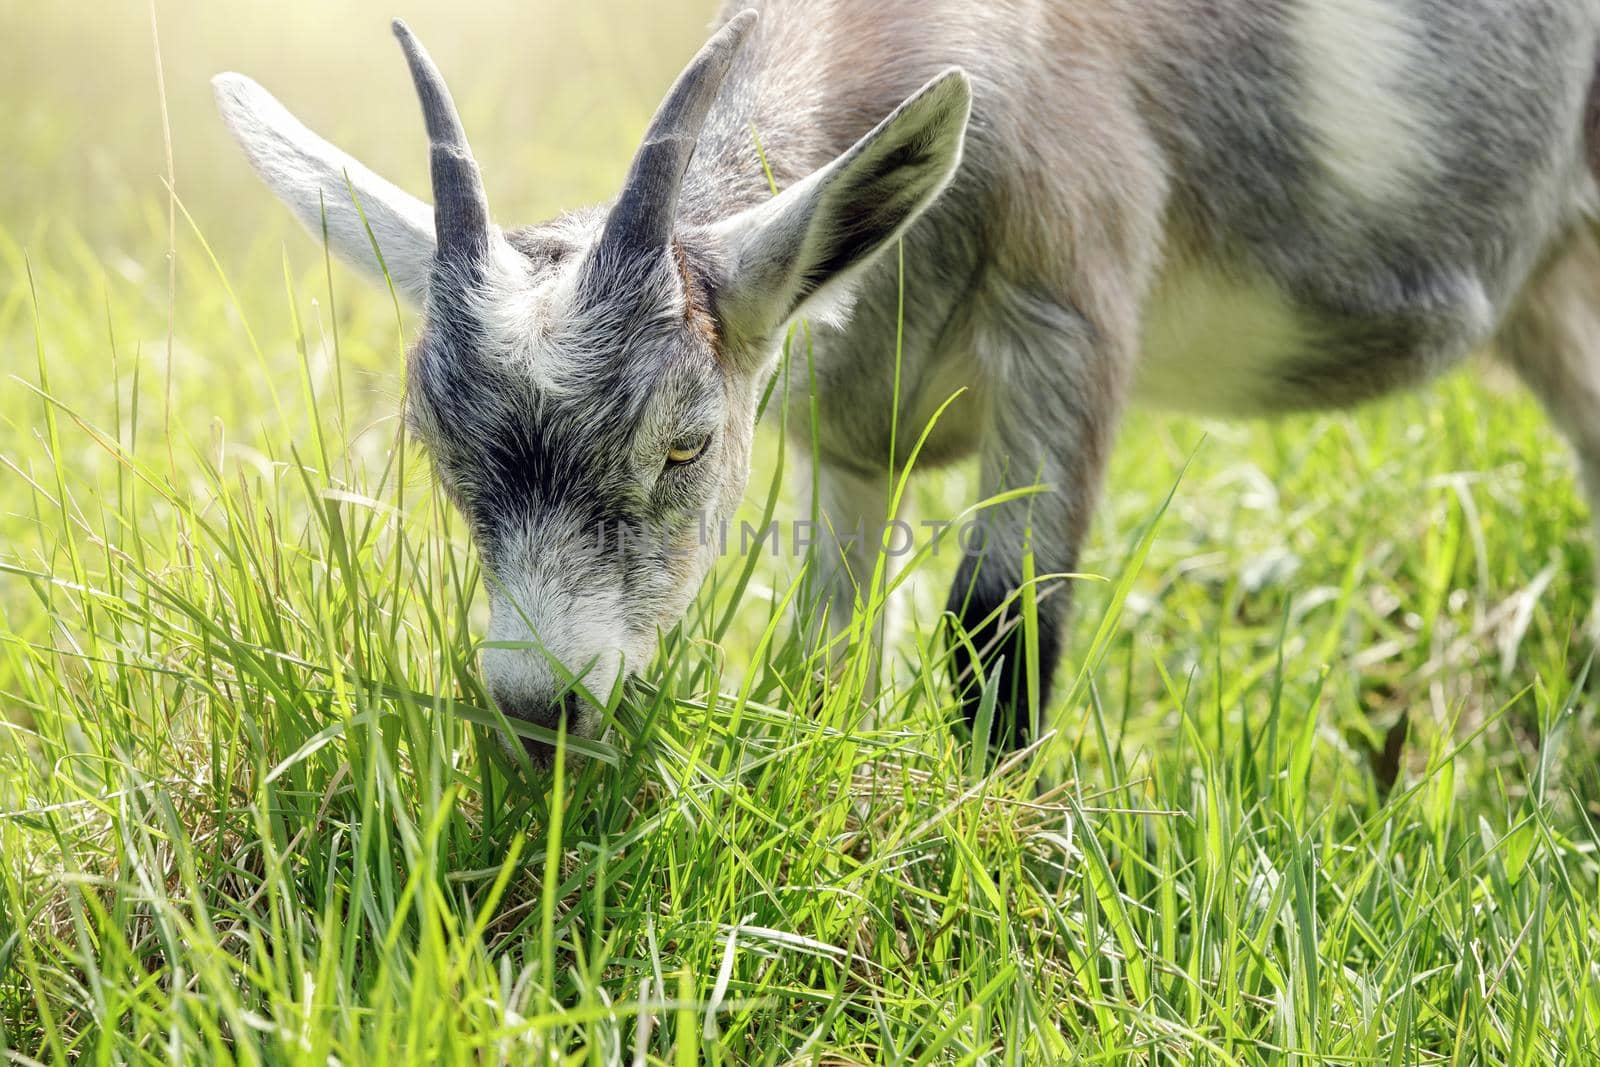 Gray goat with horns eats green grass. by Lincikas